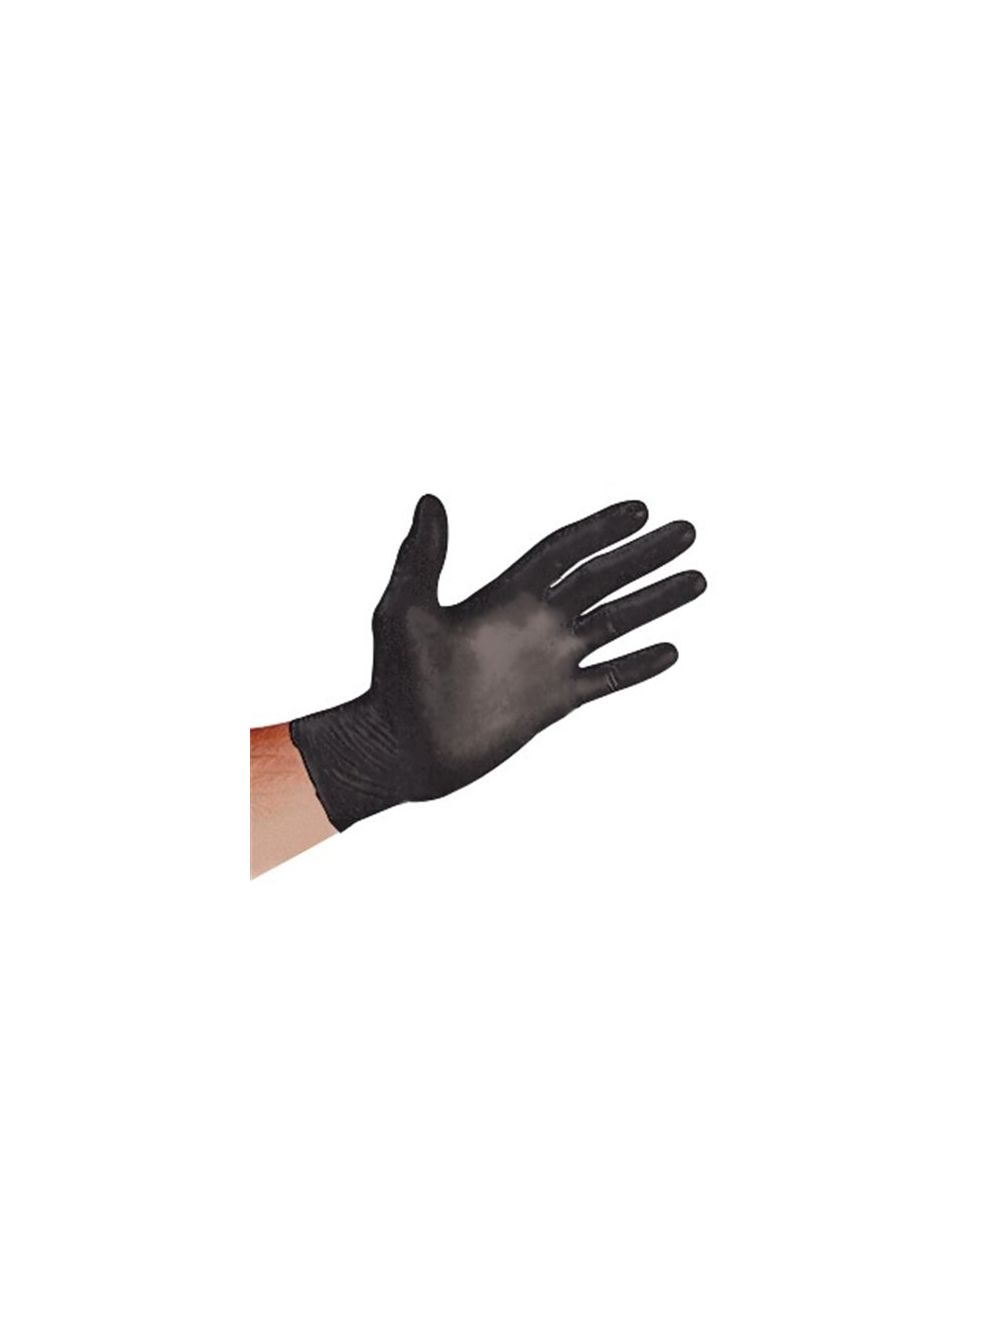 Black Powder-Free Nitrile Gloves